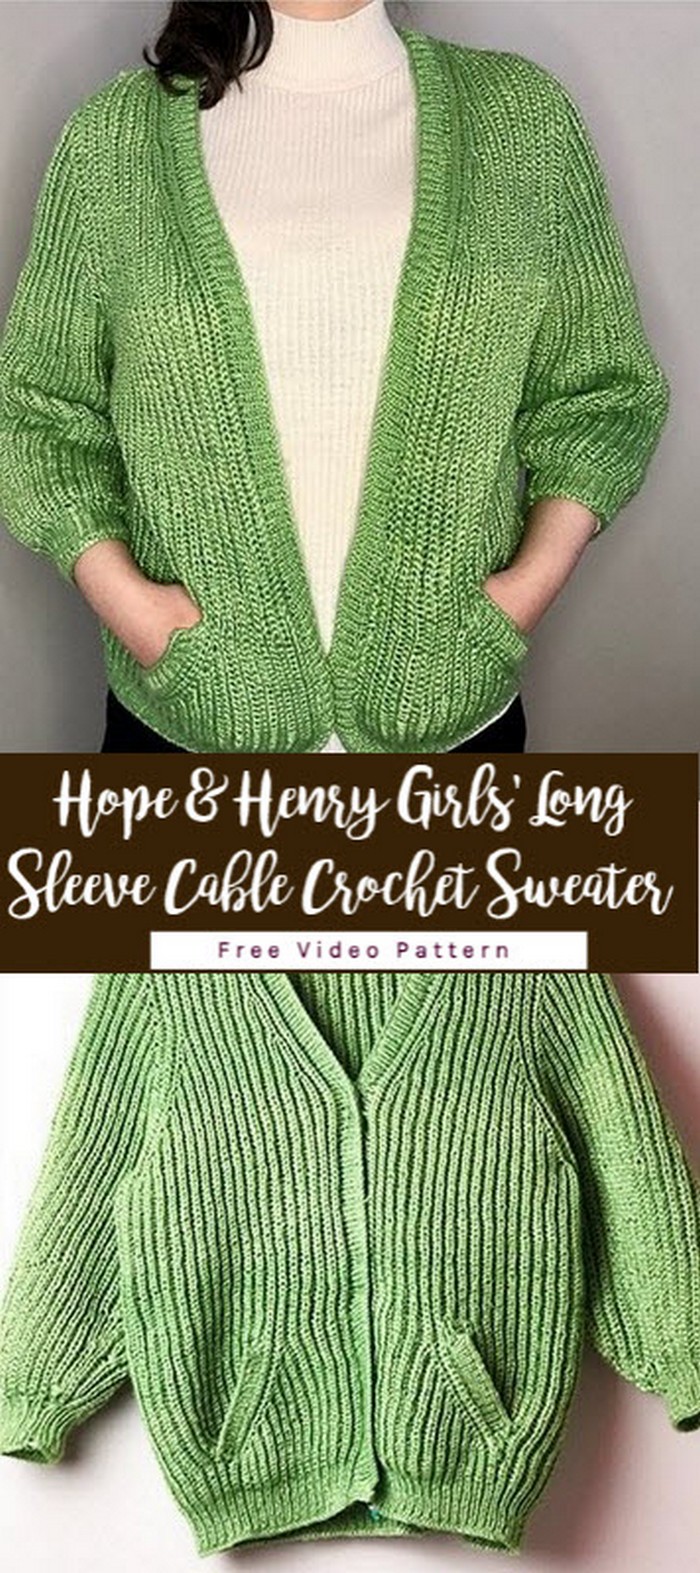 Hope & Henry Girls' Long Sleeve Cable Crochet Sweater